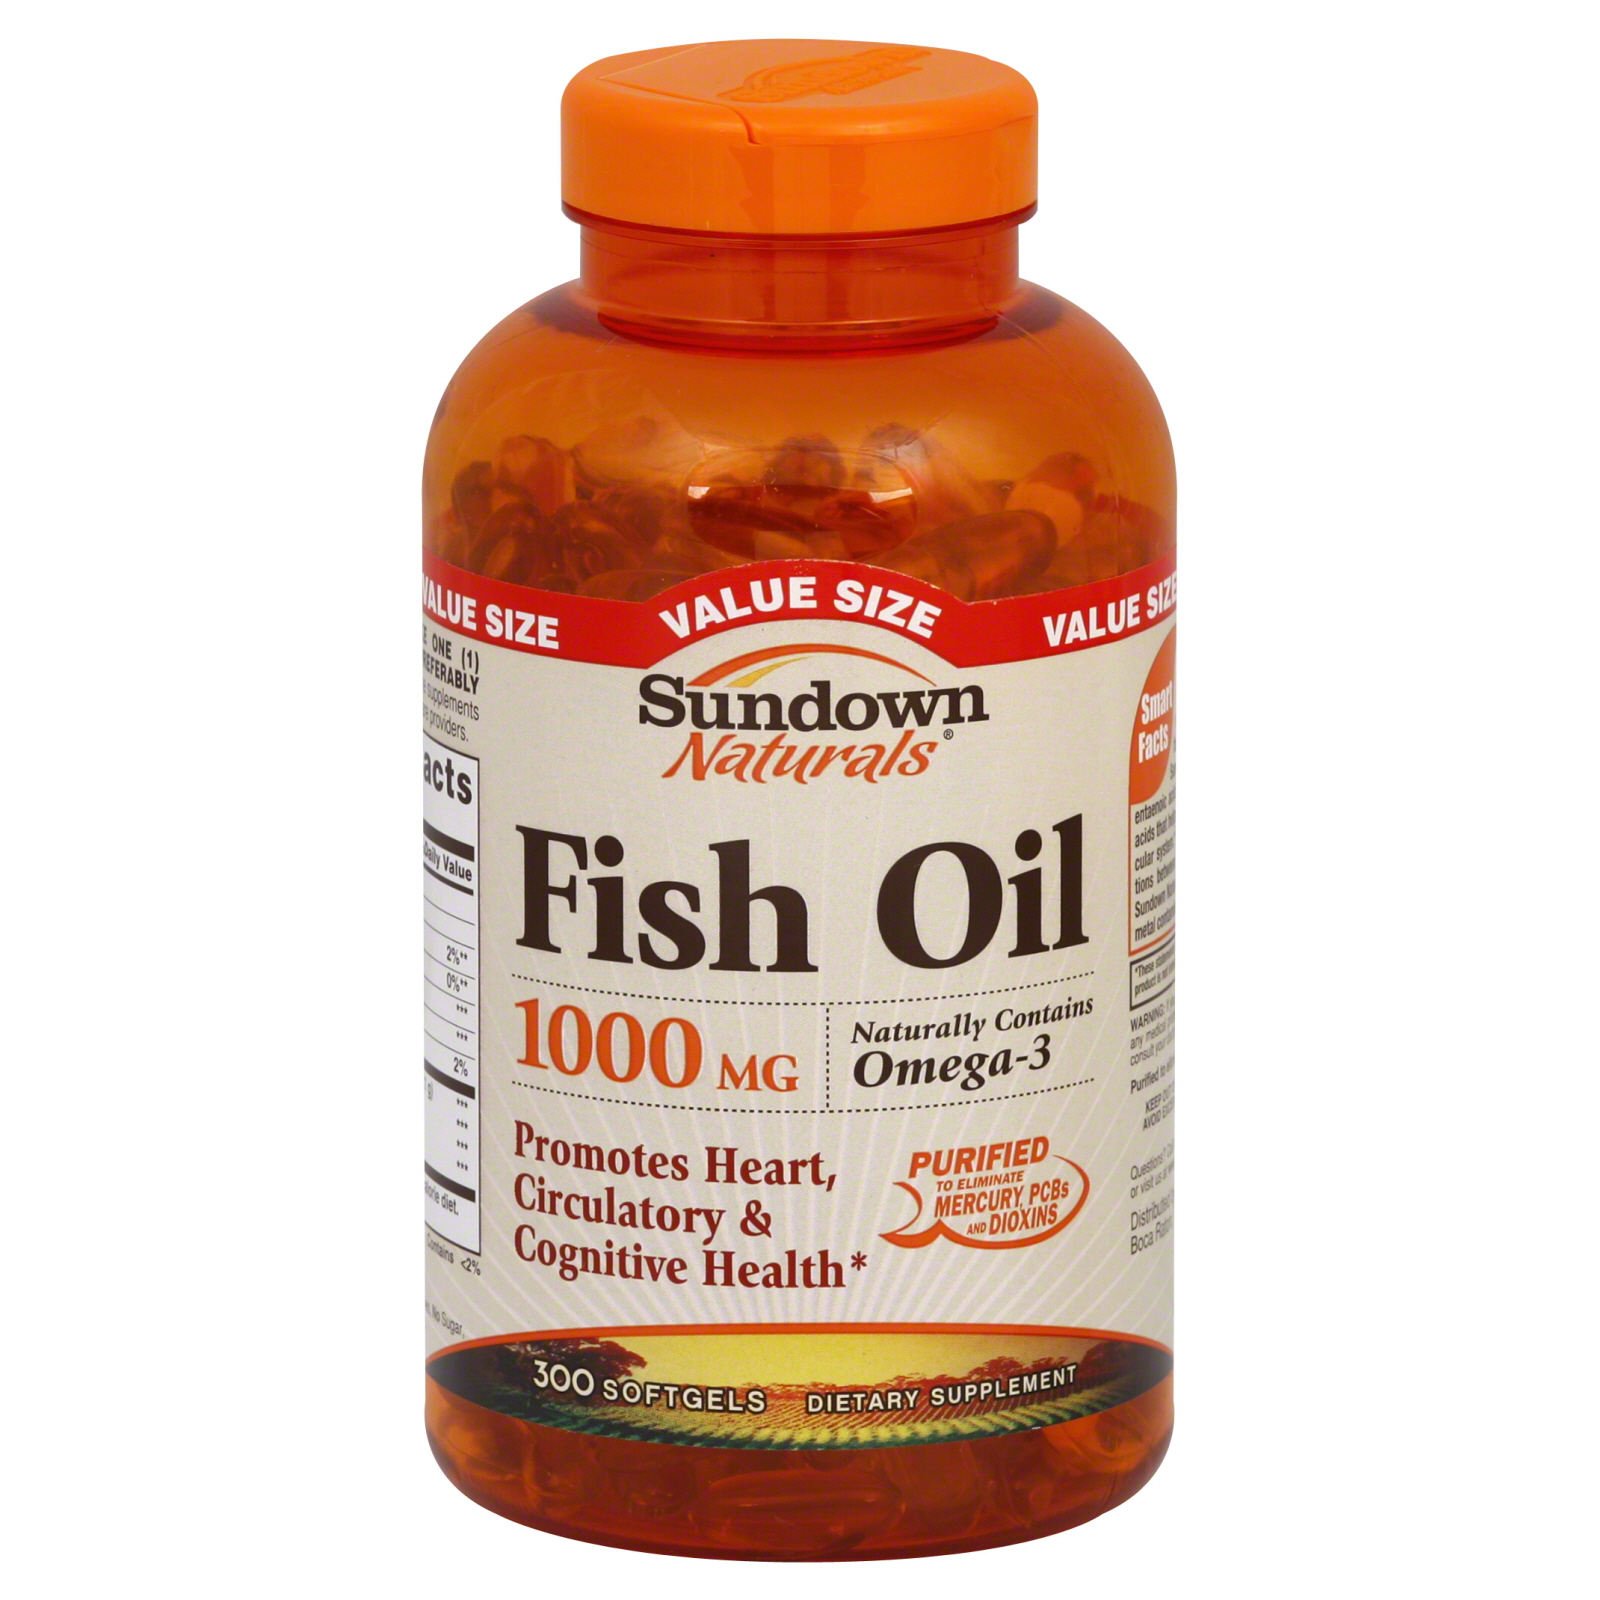 Sundown Fish Oil with Omega-3 Fatty Acids, 1000 mg, Softgels, Value Size, 300 softgels